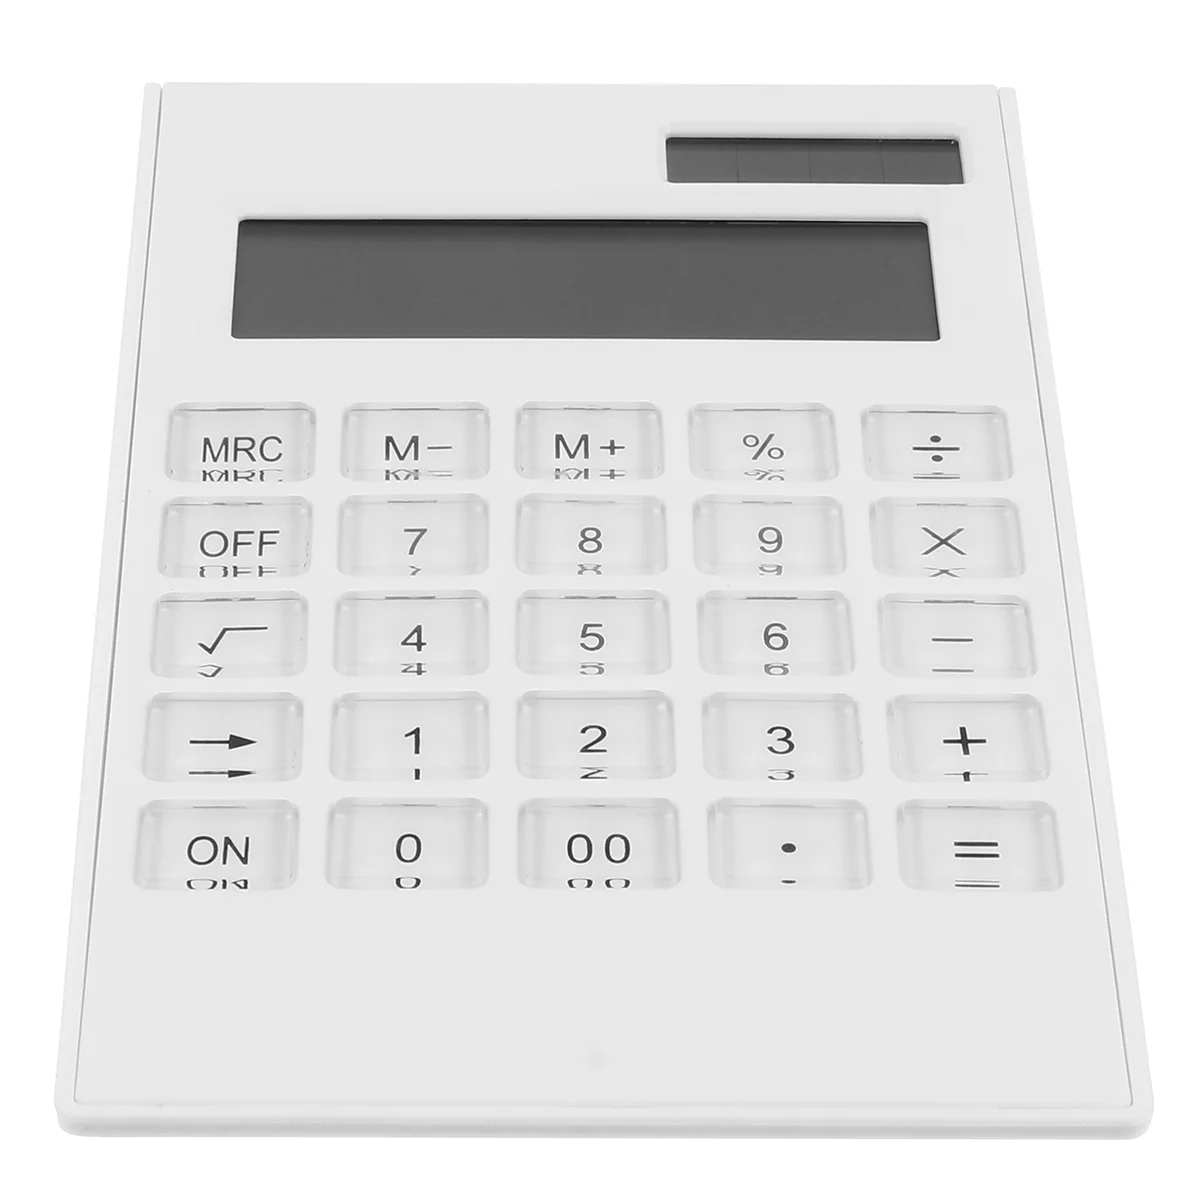 

Calculator Office Solar Calculators Desktop Electronic Handheld Pocket Mini Portable Desk School Lcd Supplies Scientific Kids